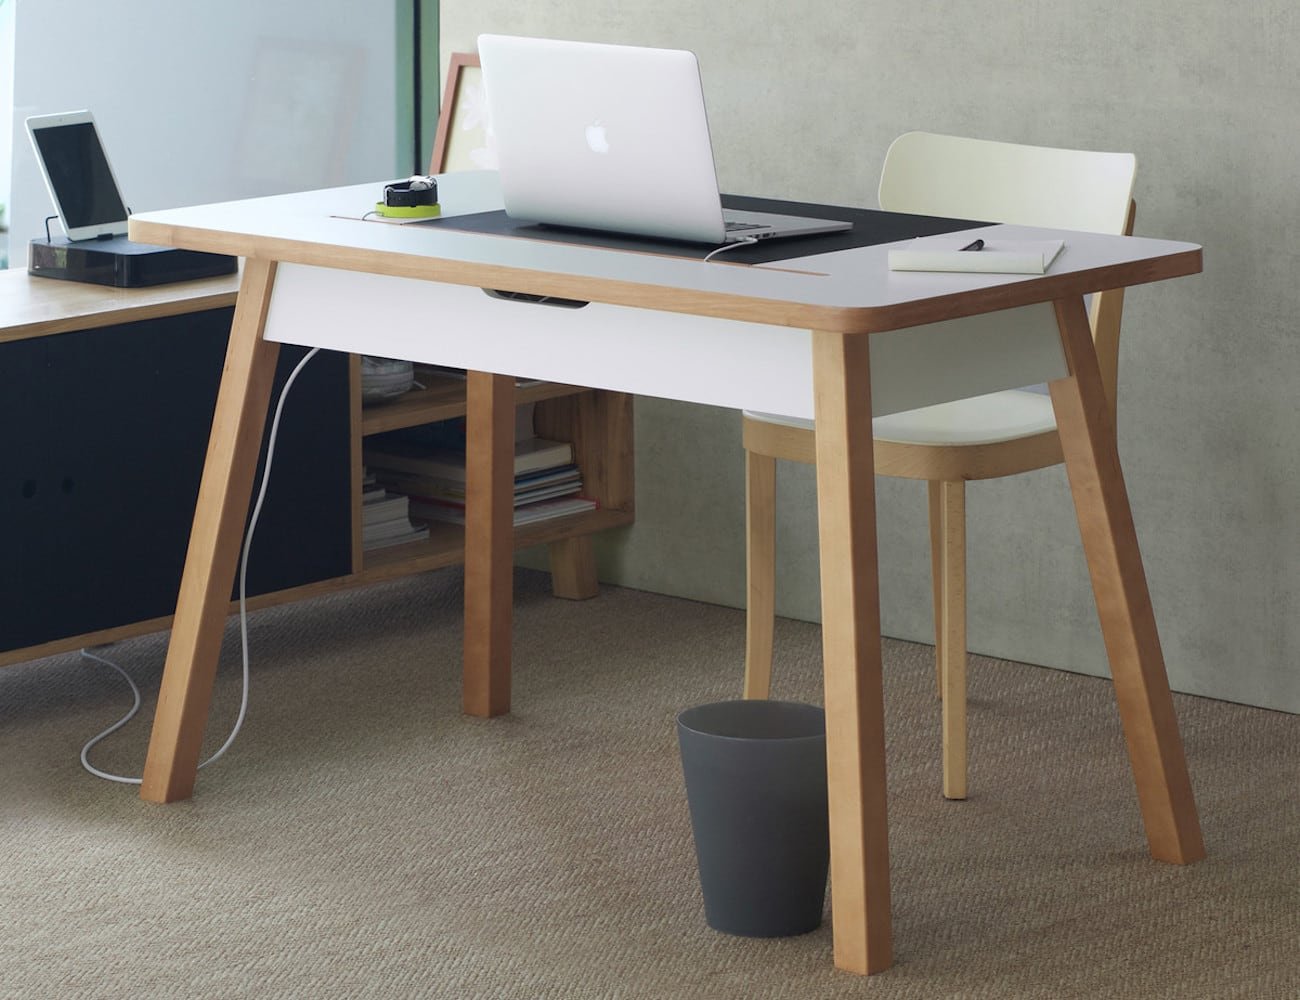 Bluelounge StudioDesk Advanced Office Desk keeps your workspace tidy